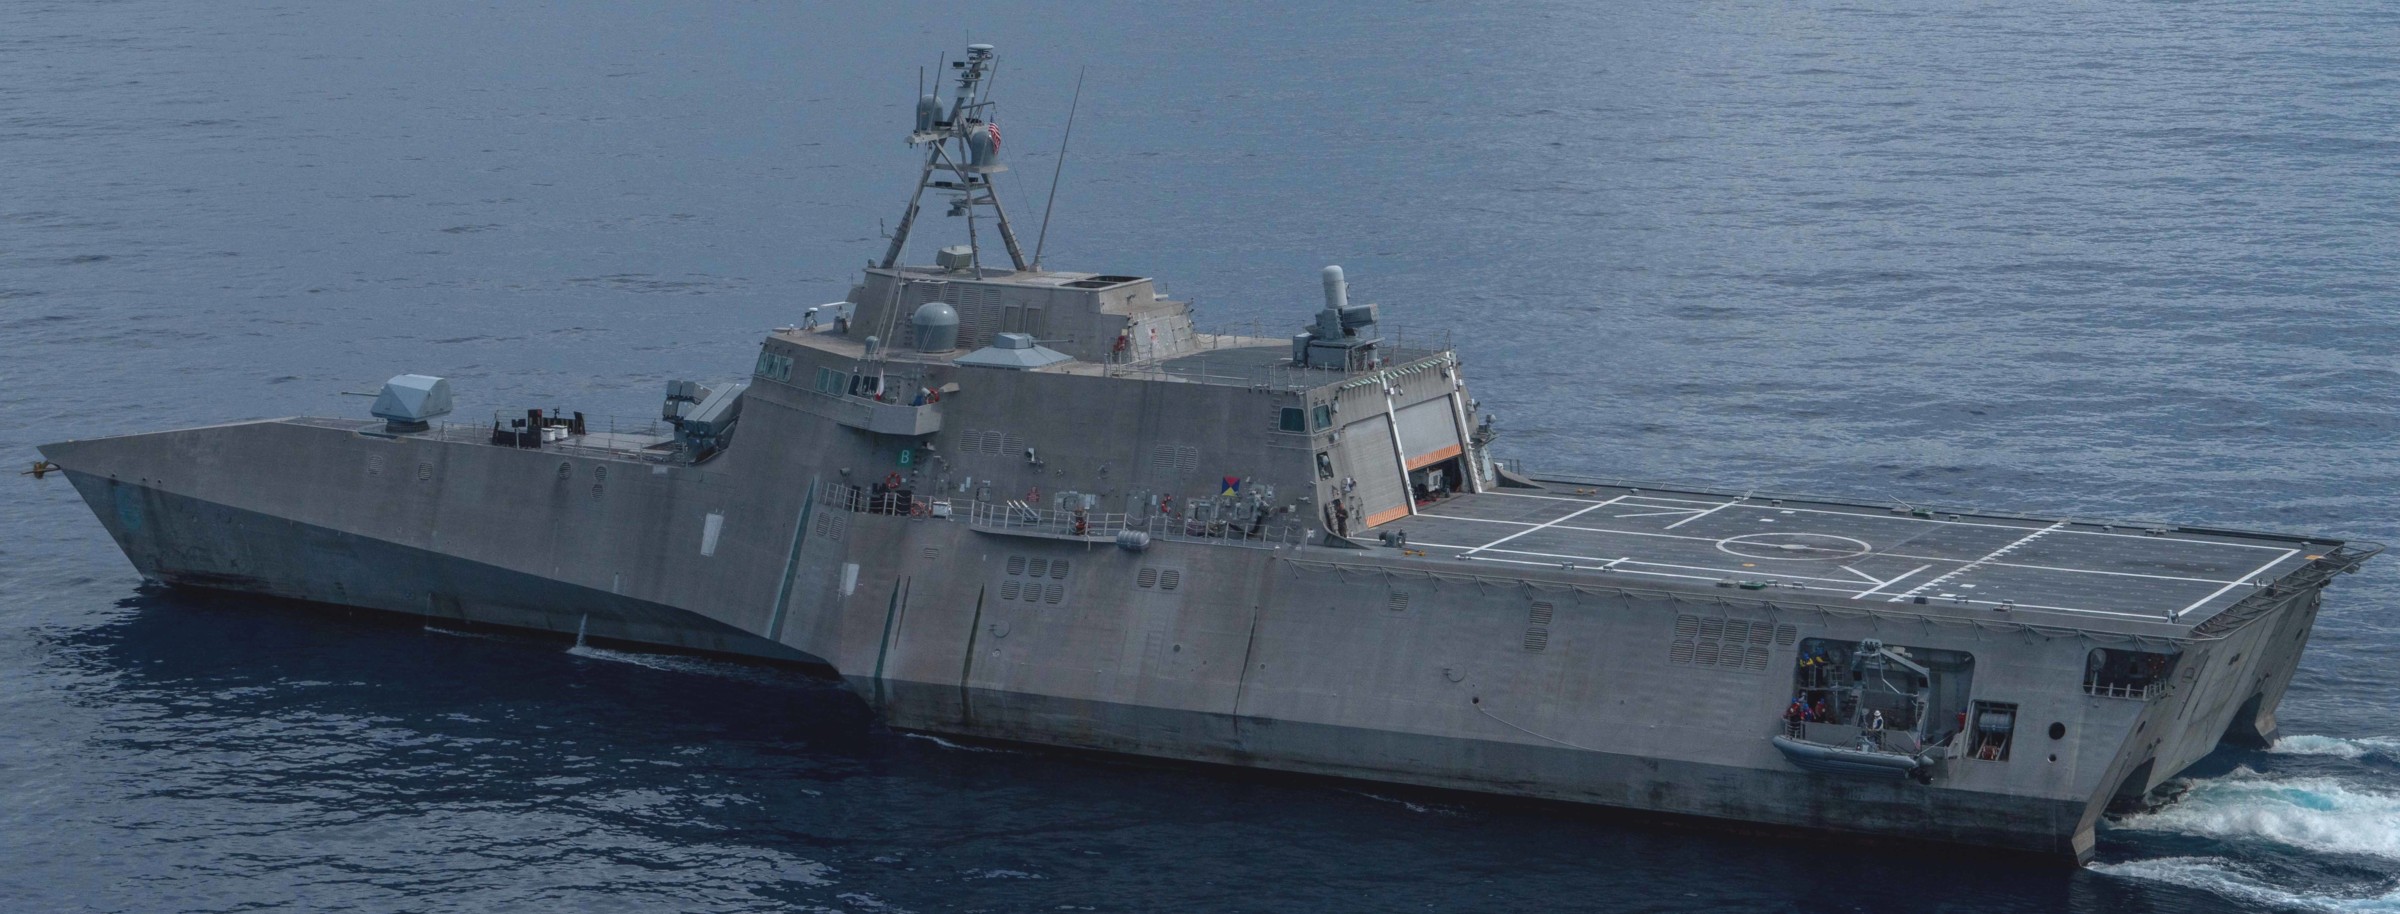 lcs-6 uss jackson independence class littoral combat ship us navy 42